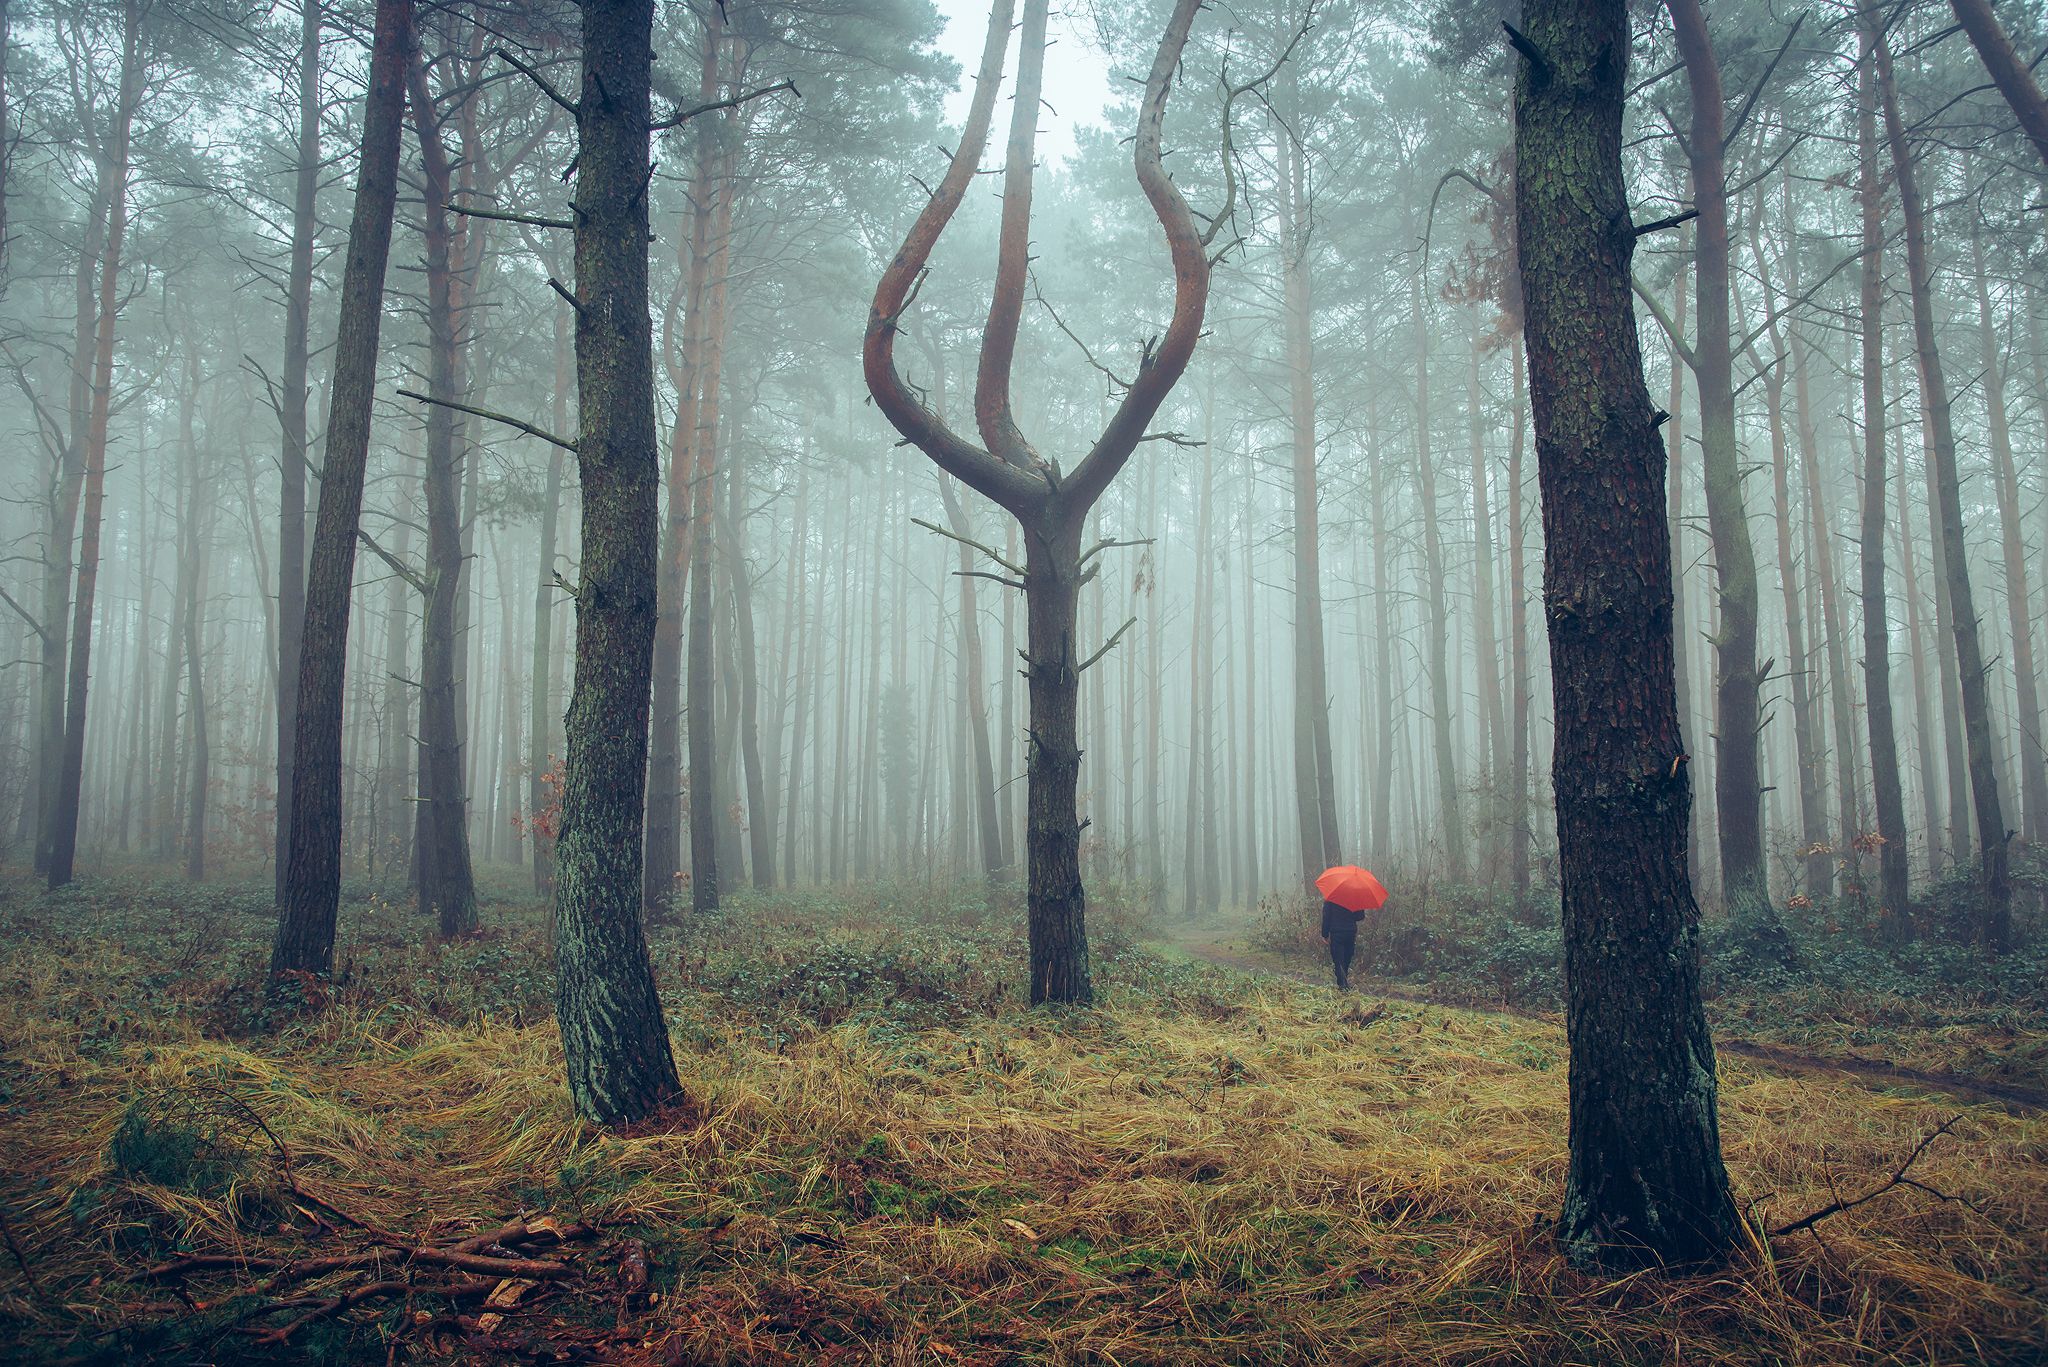 утренняя прогулка в сосновом лесу morning walk pine forest foggy alone melancholy red umbrella trees fog dark nature, Radoslaw Dranikowski